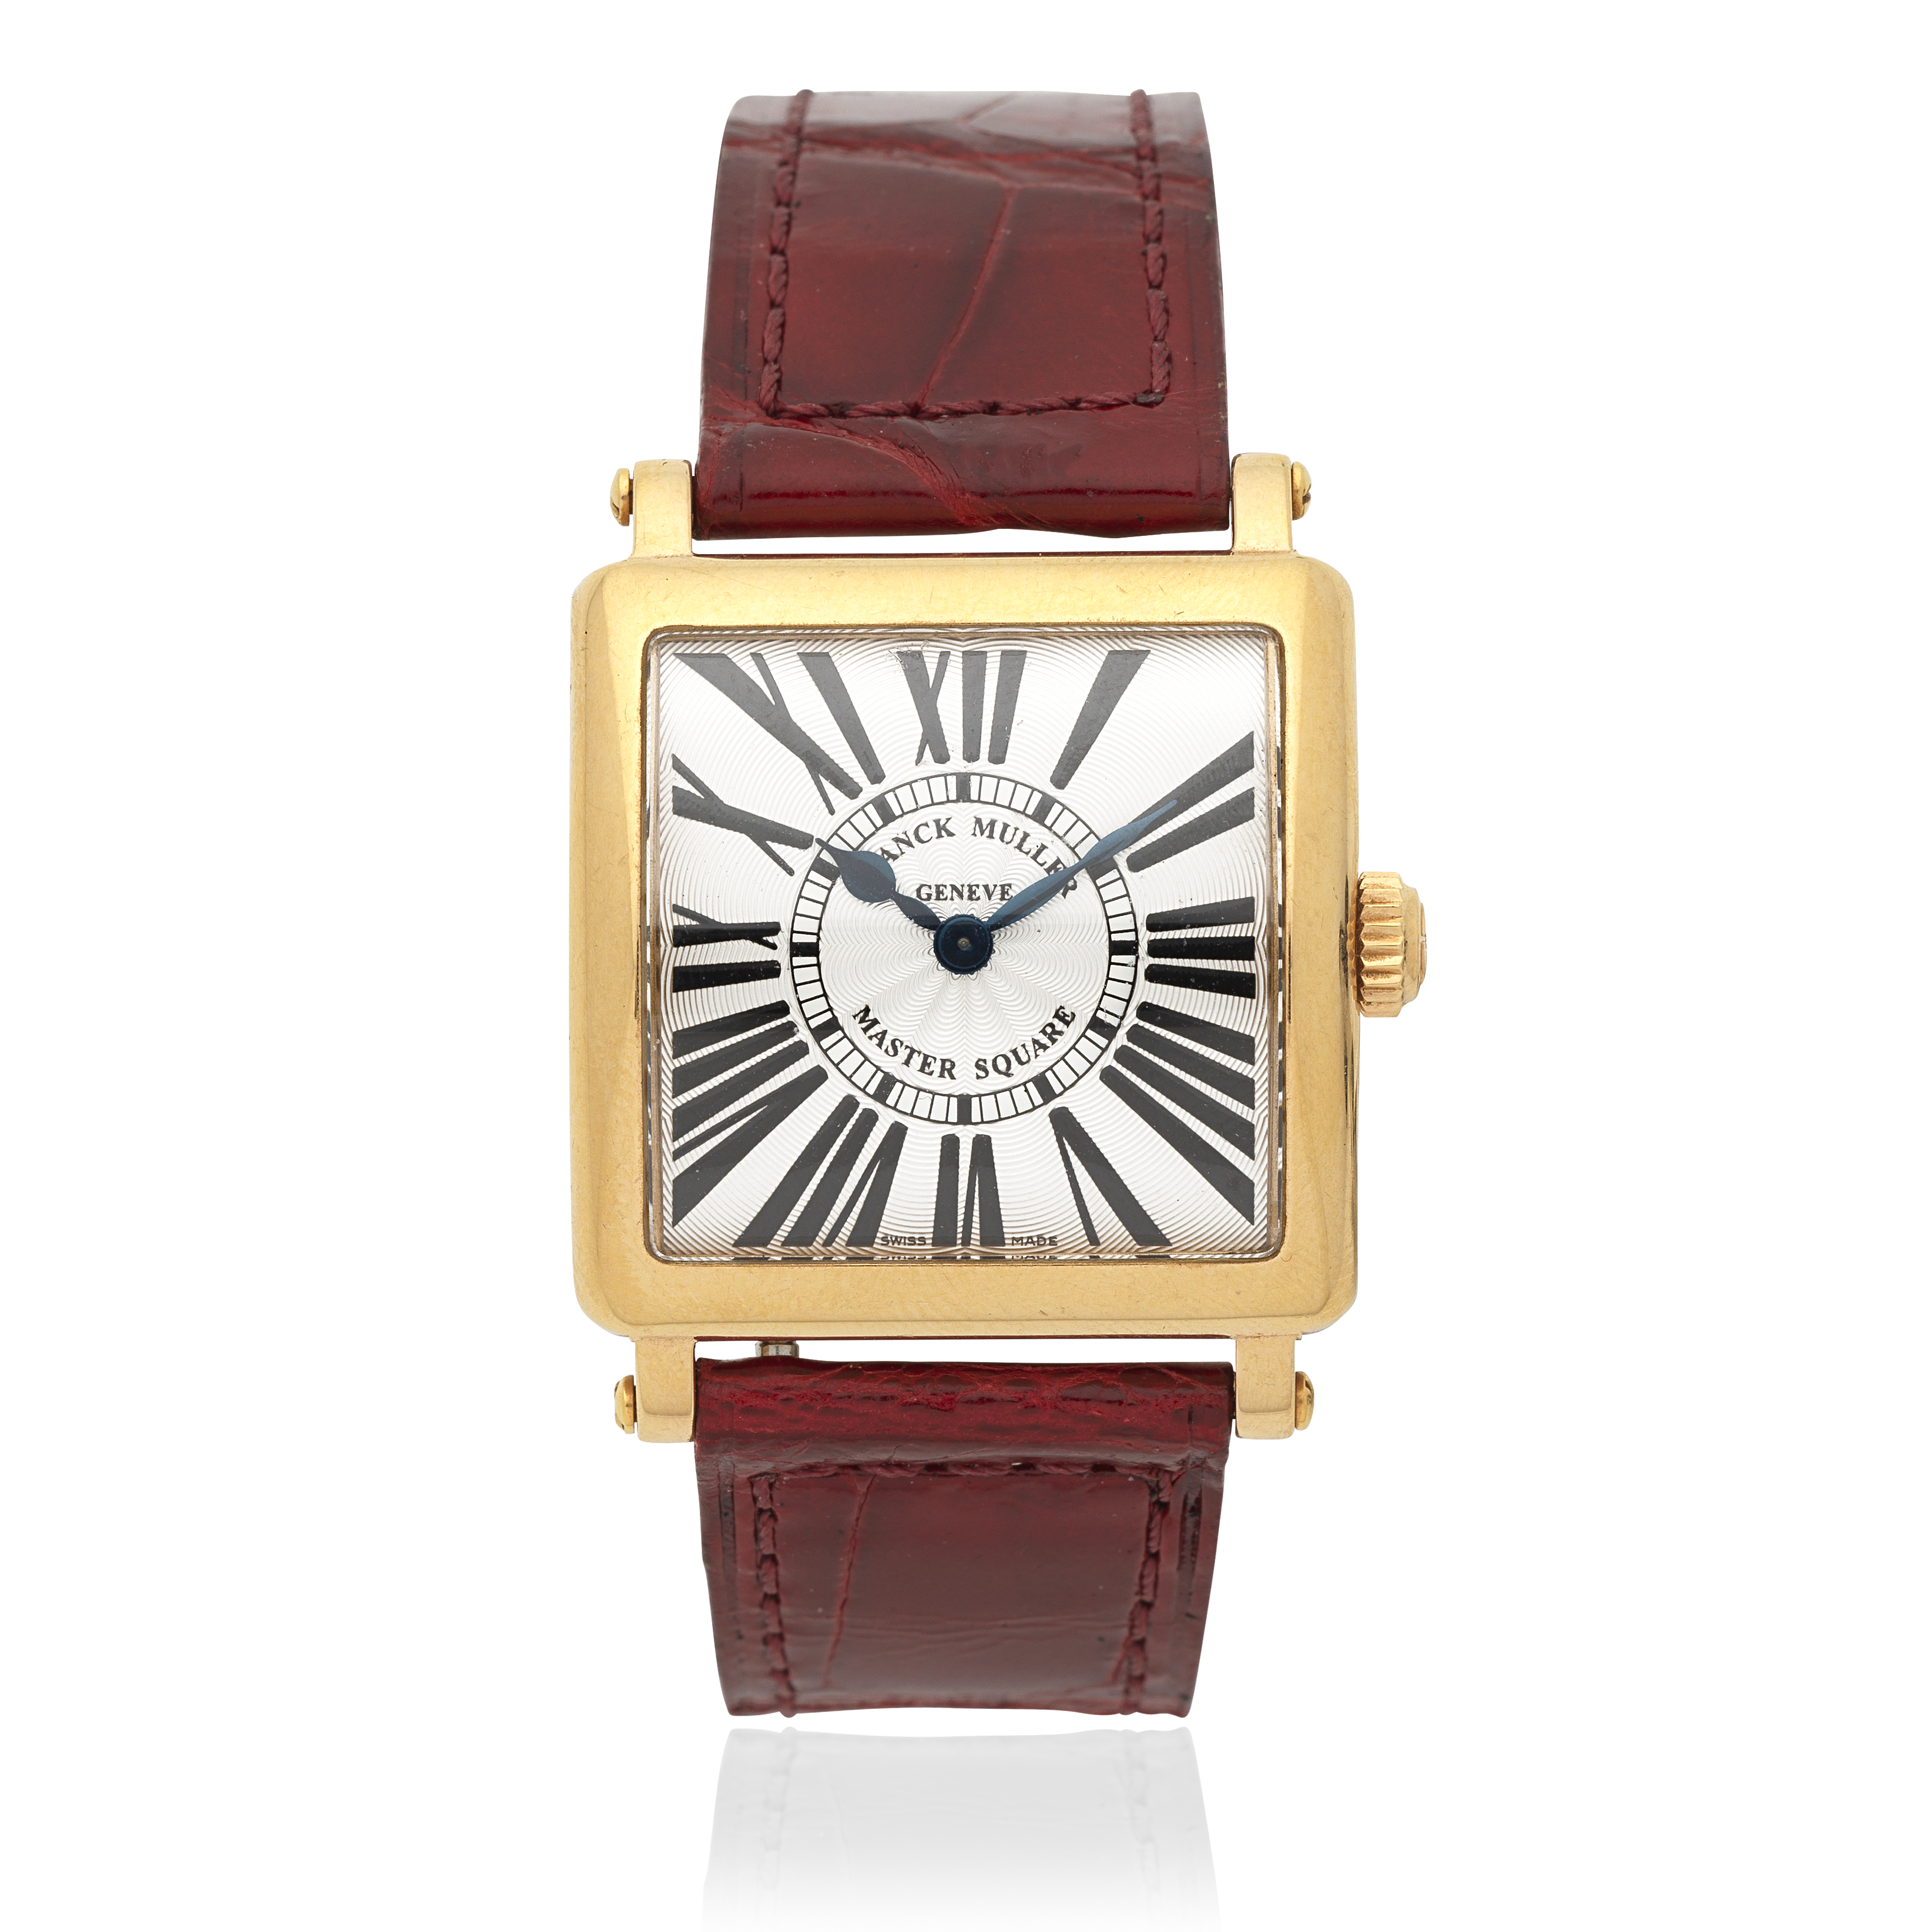 Franck Muller. A lady's 18K rose gold quartz wristwatch Master Square, Ref: 6002 S QZ, Circa 2000